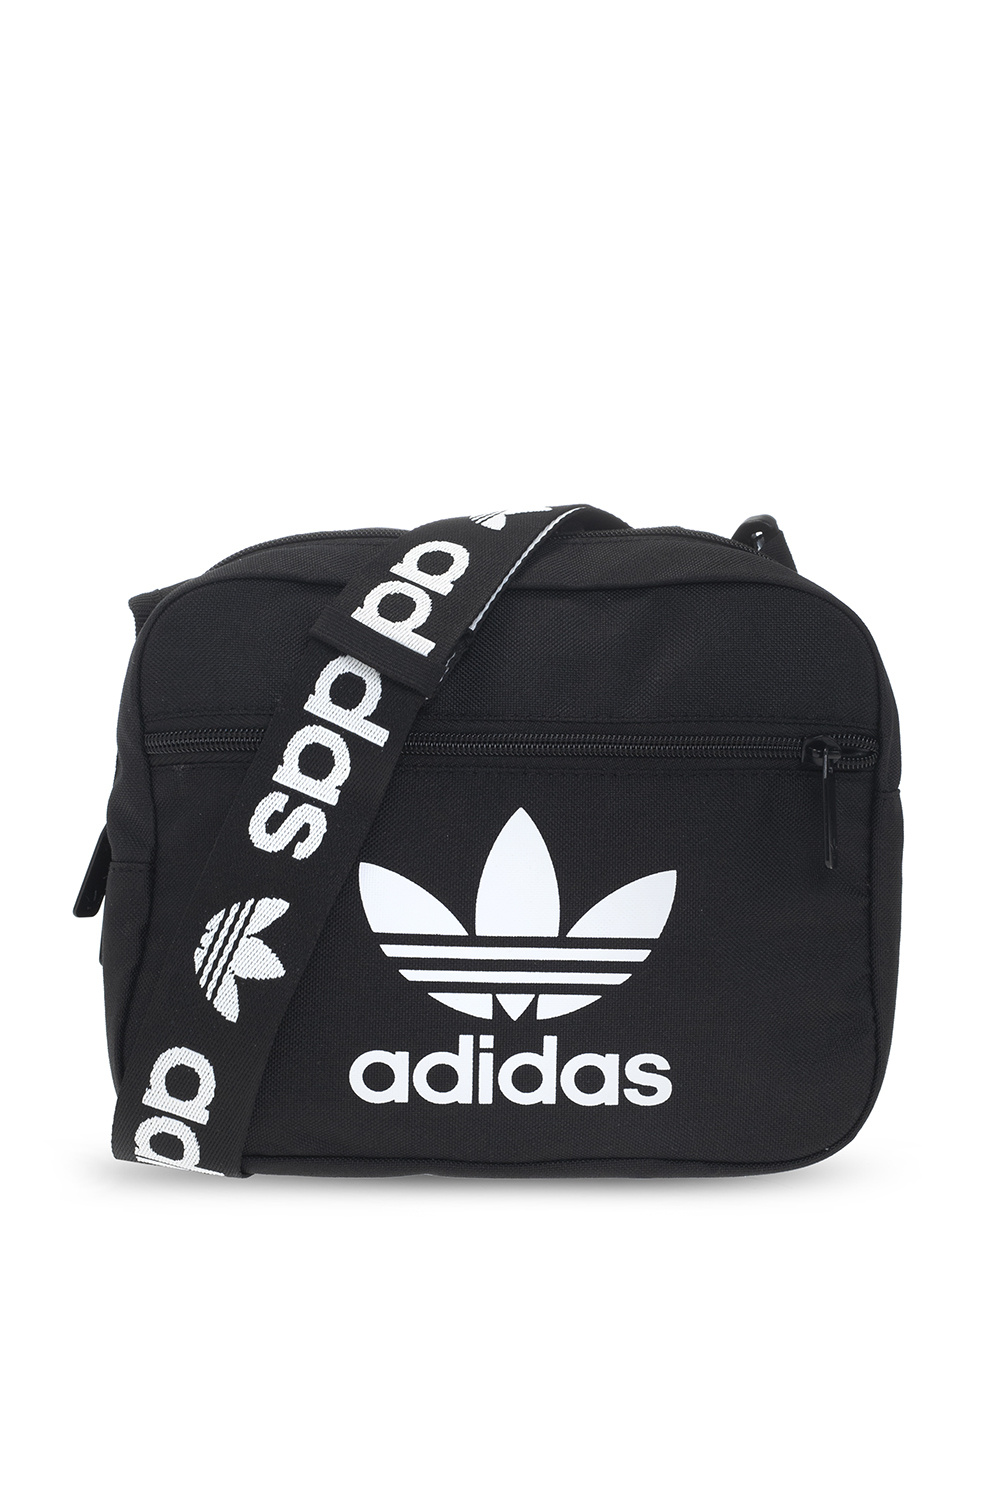 اوقان JmksportShops | ADIDAS Originals Shoulder bag with logo | vetement ... اوقان